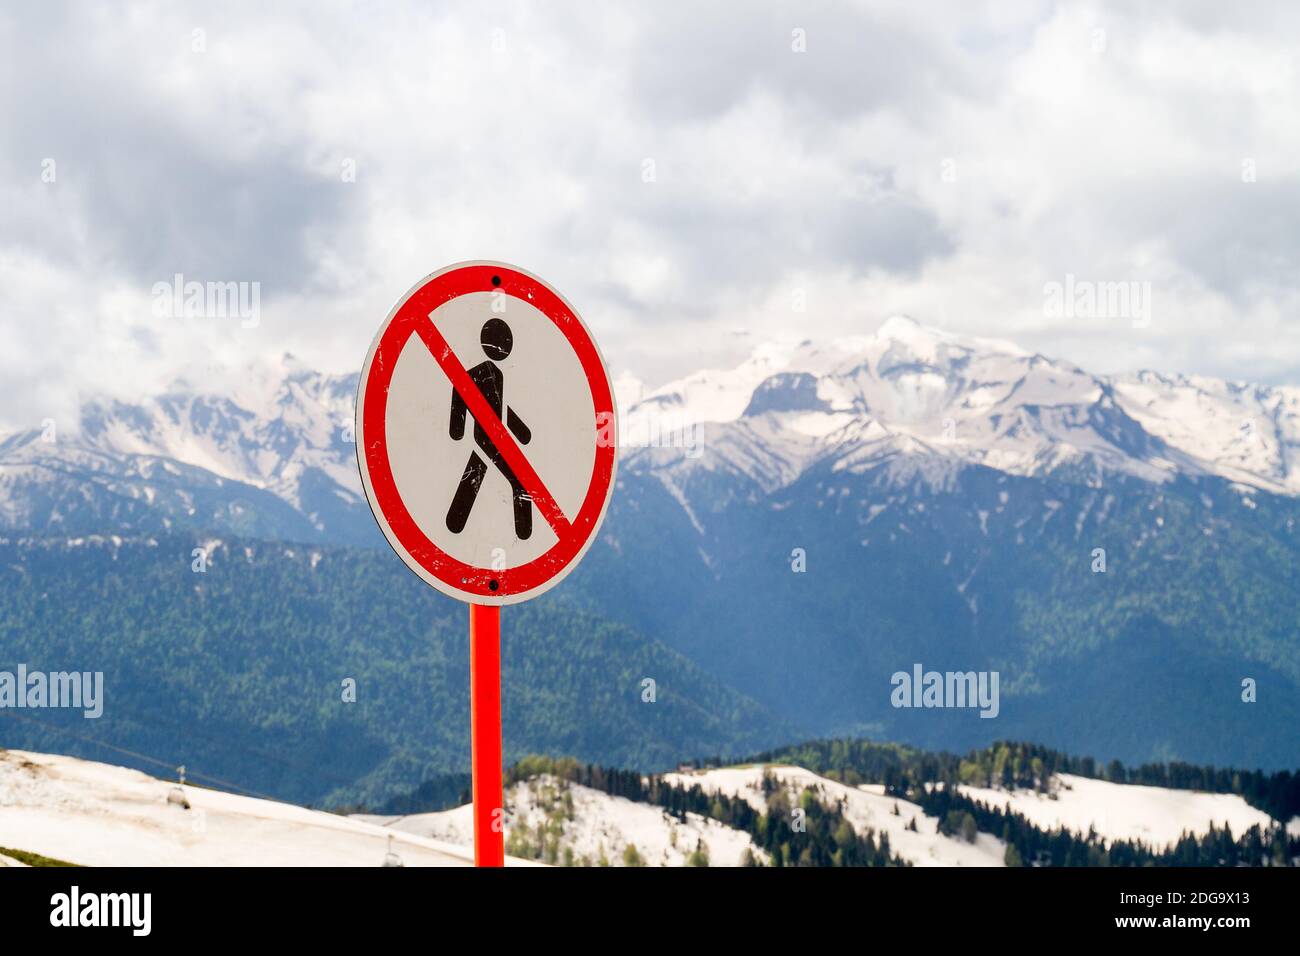 Russia. Krasnodar region. Passage prohibiting sign in the mountains. Stock Photo